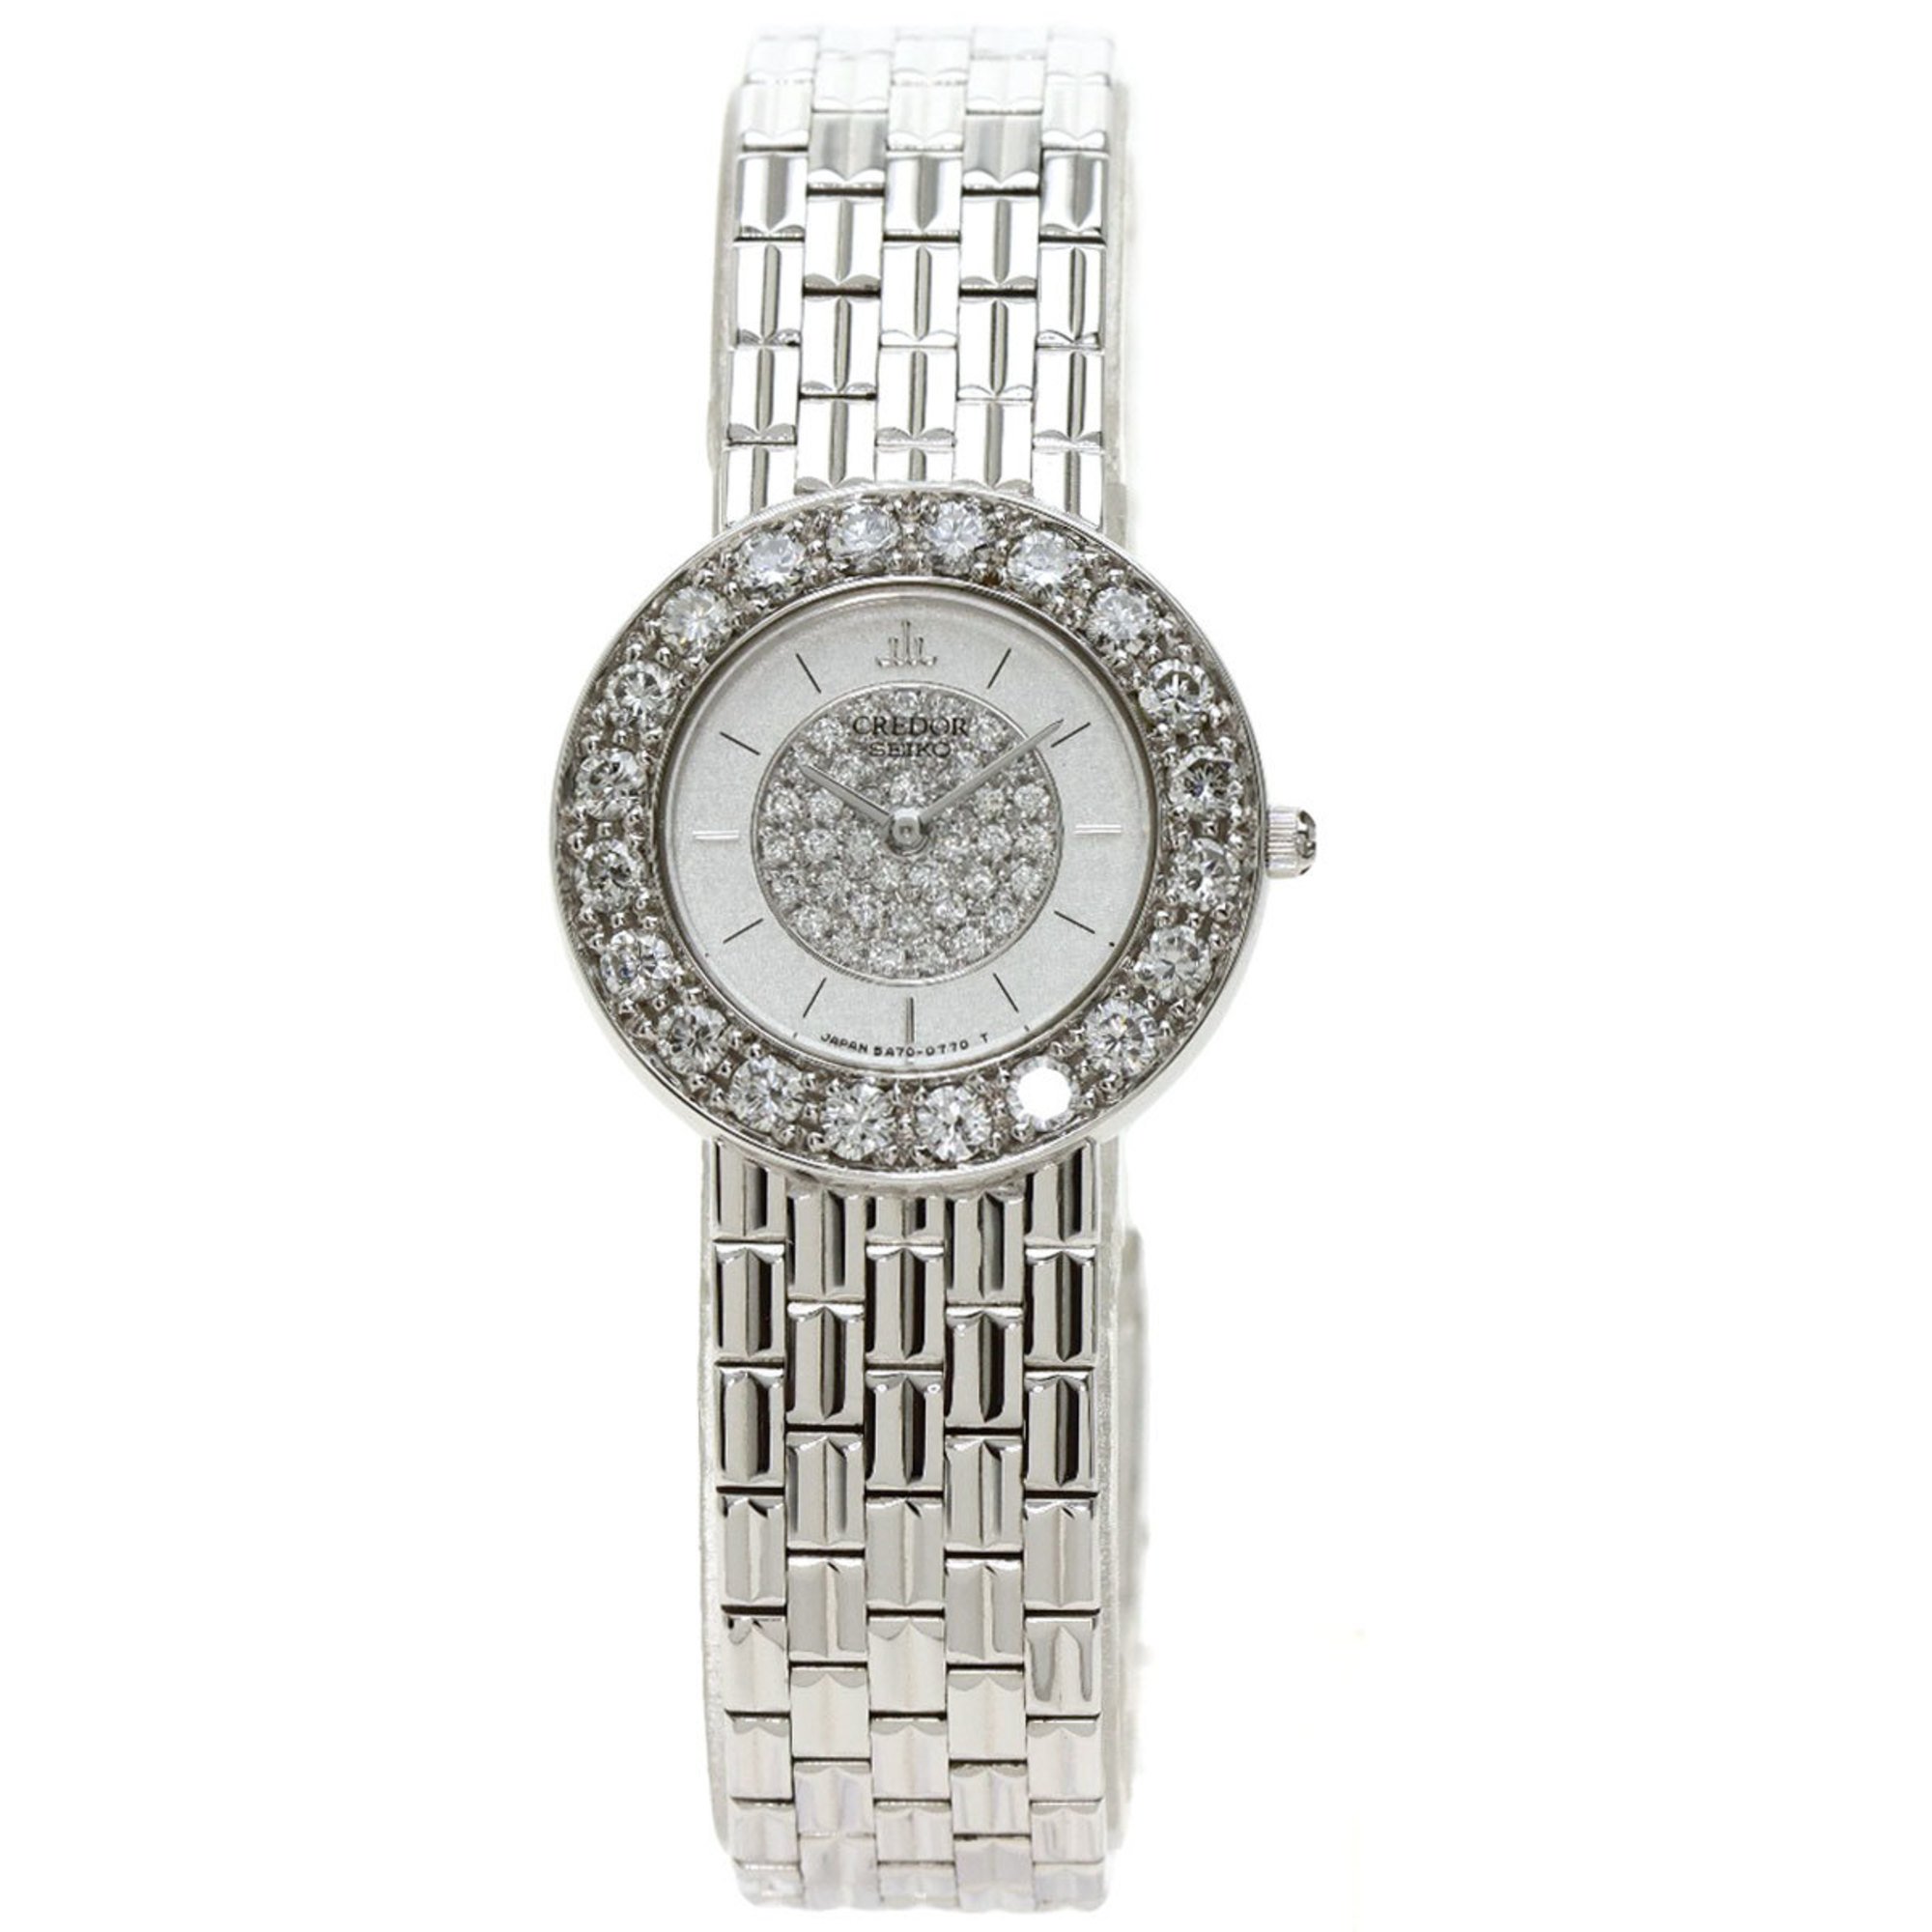 Seiko GTWE005 5A70-0380 Credor Diamond Bezel Watch K18 White Gold K18WG Ladies